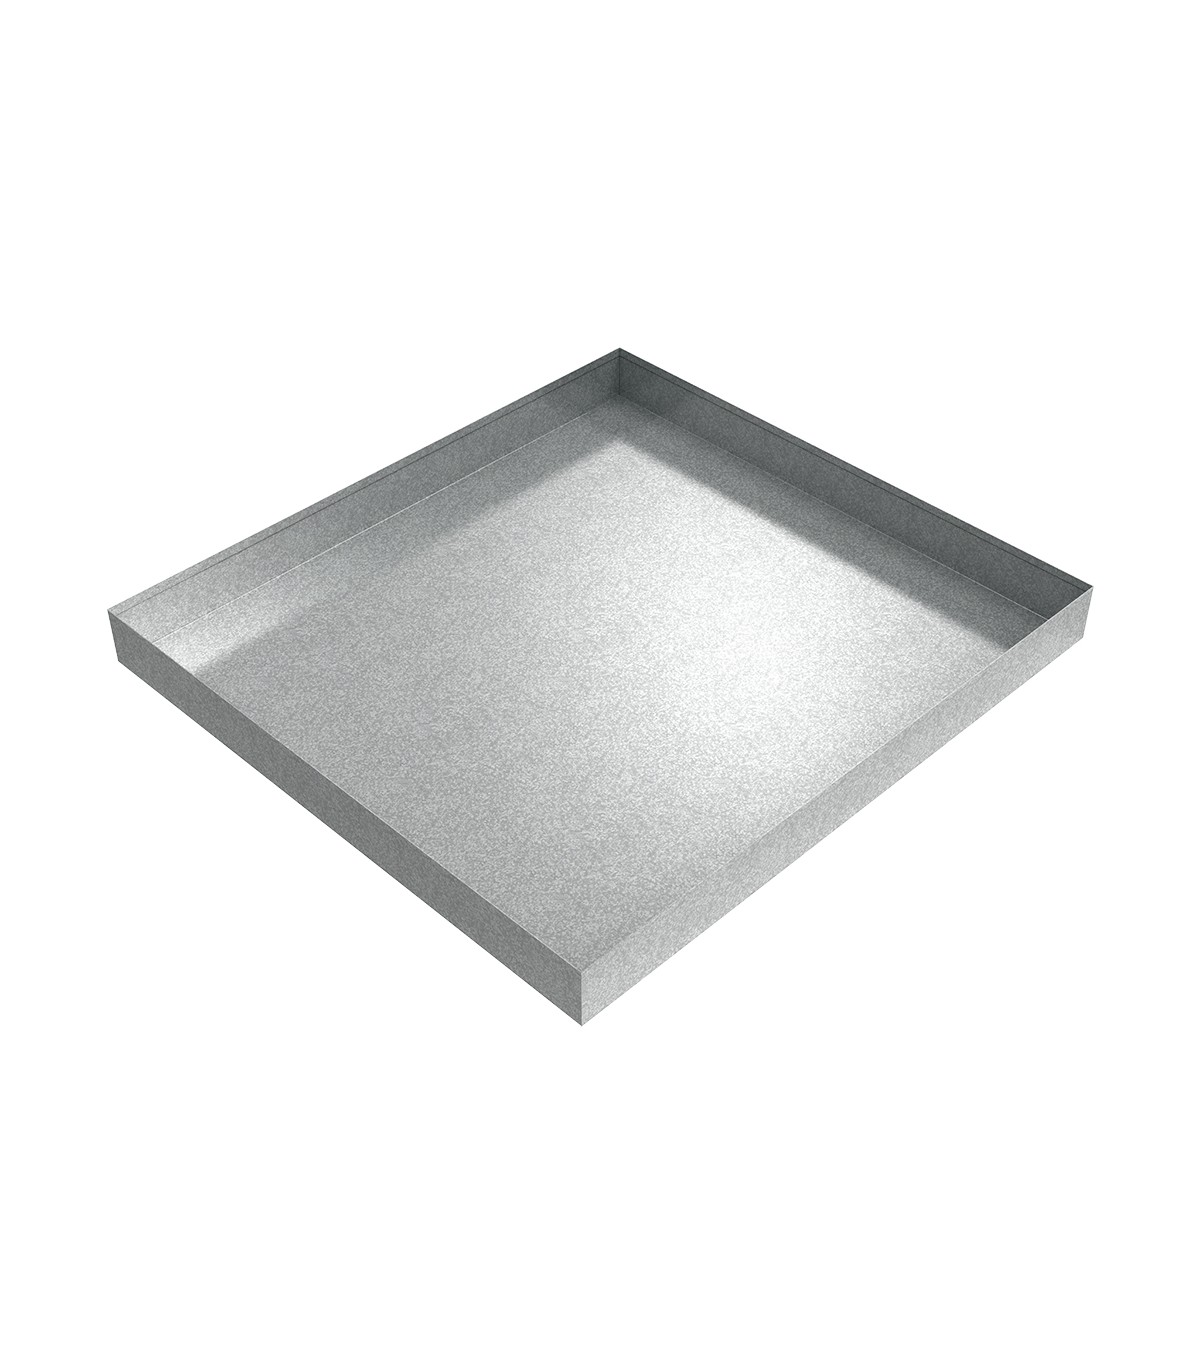 Compact Washer Floor Tray - 27" x 25" x 2.5" - Galvanized Steel